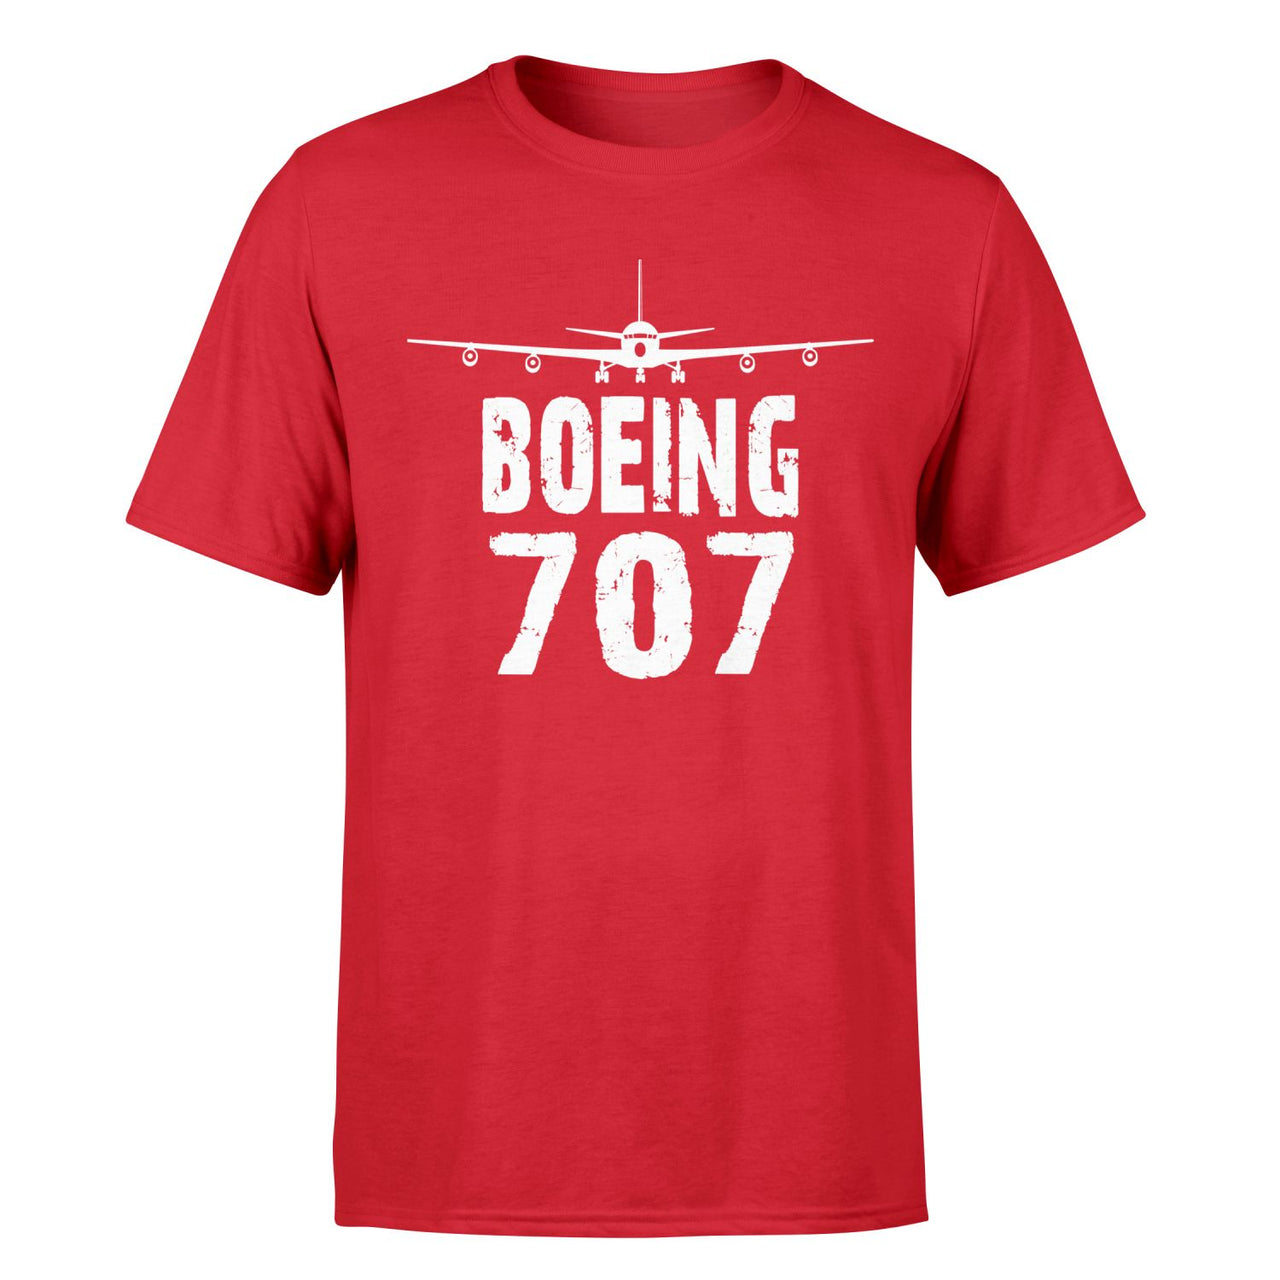 Boeing 707 & Plane Designed T-Shirts